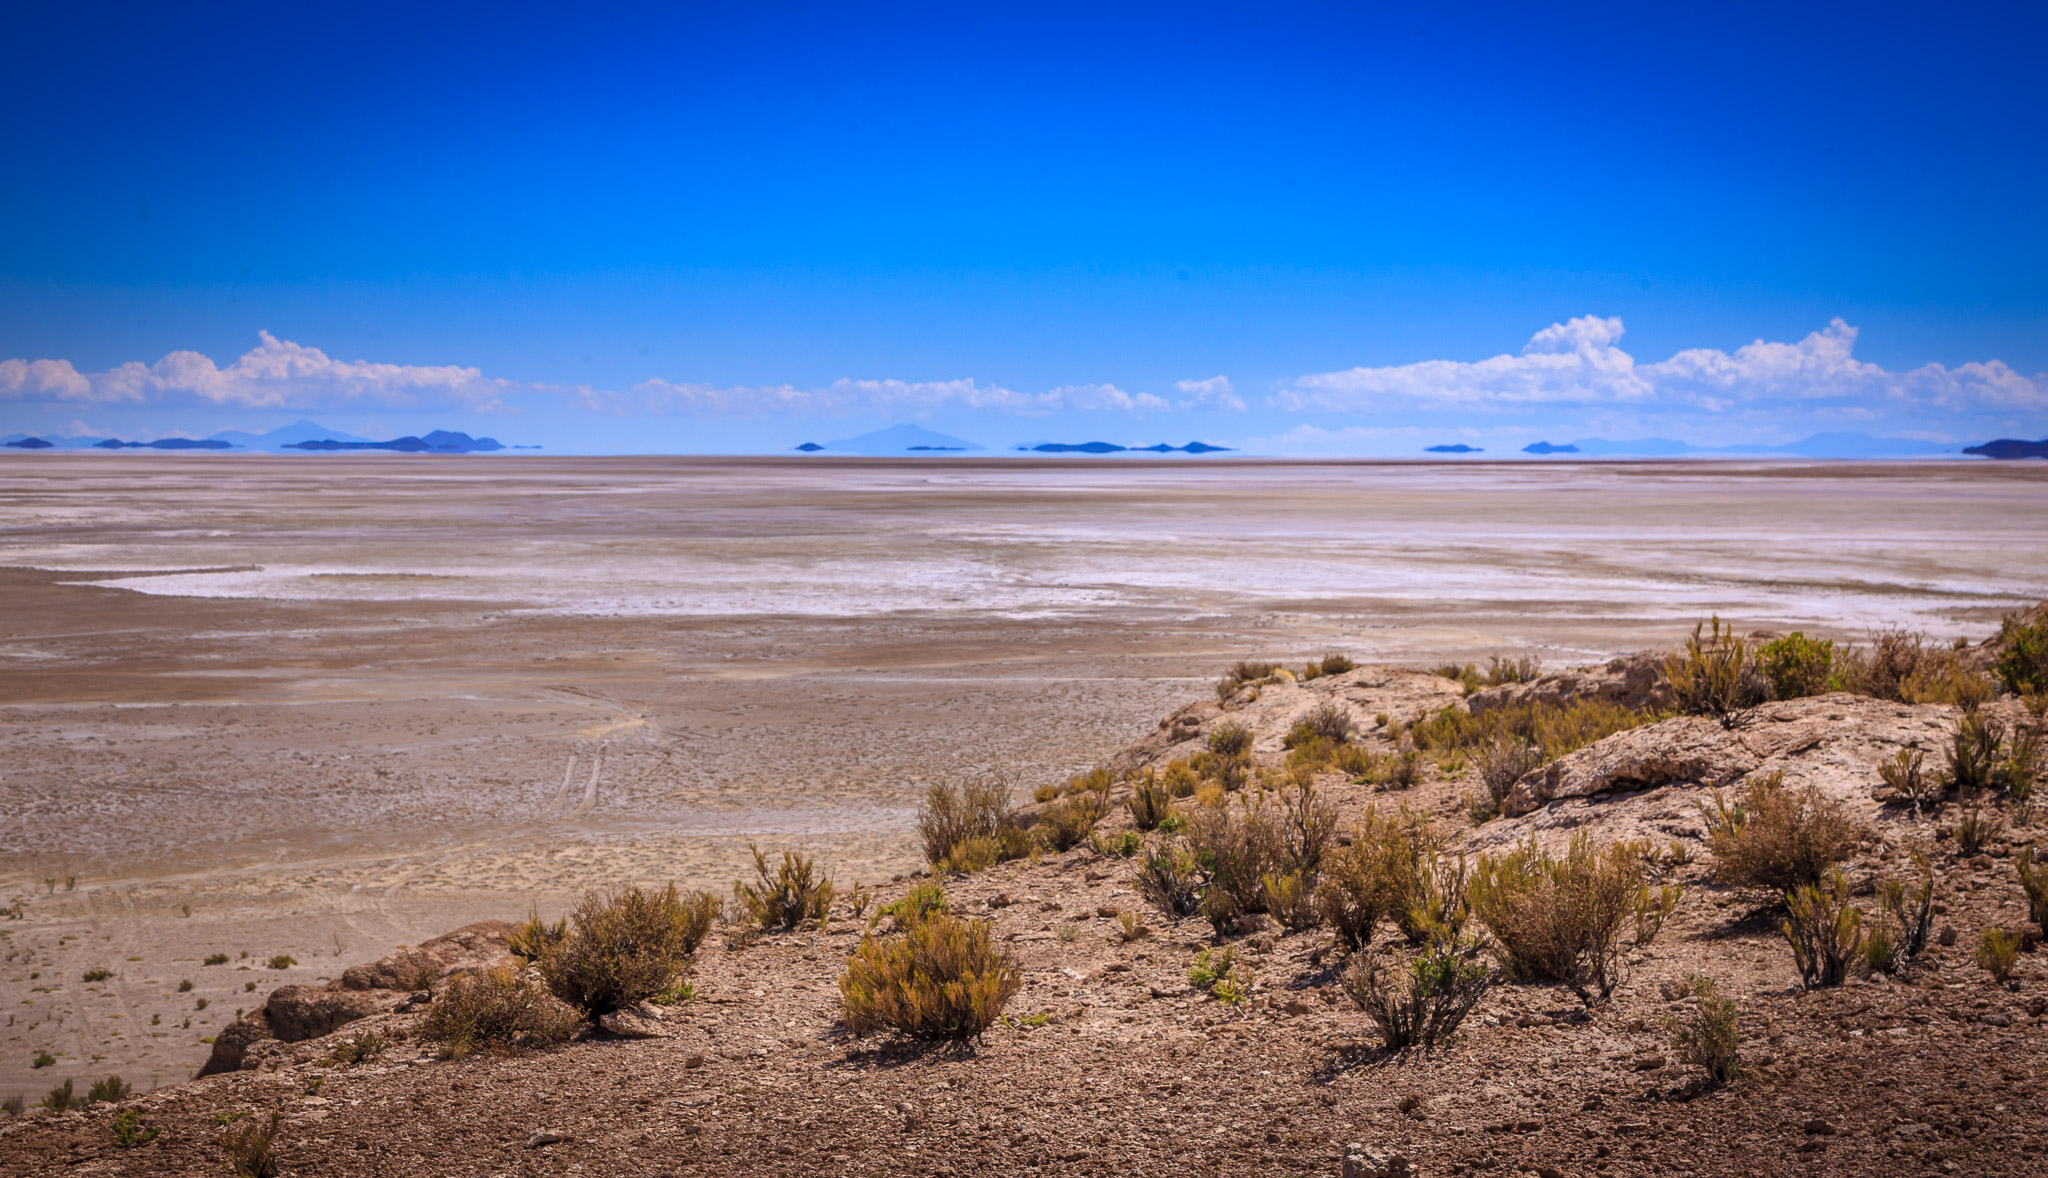 Entering 100 miles of salt flats, Salar de Uyuni